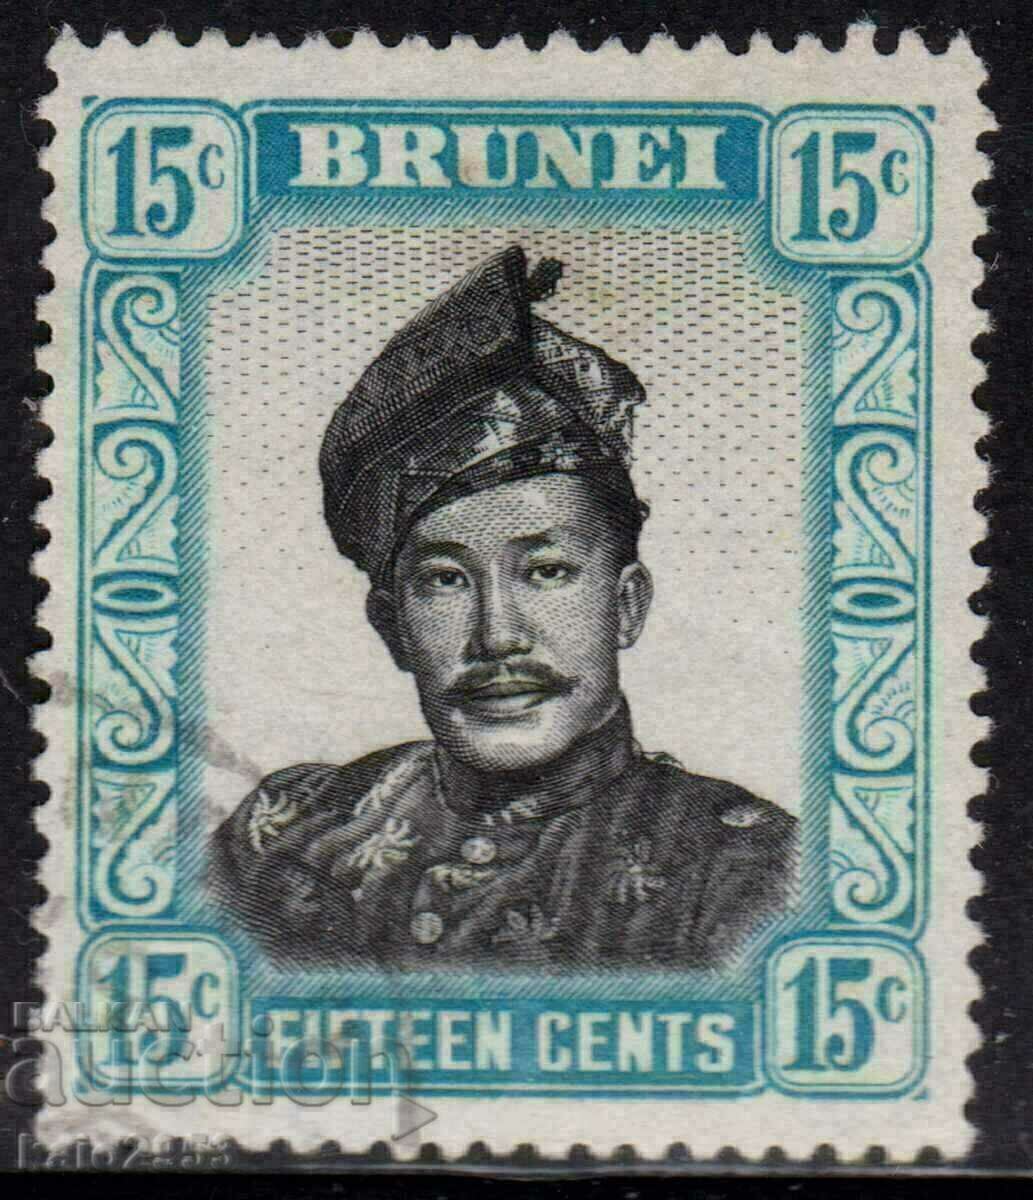 GB/Brunei-Протекторат-1952-Султан Омар,клеймо